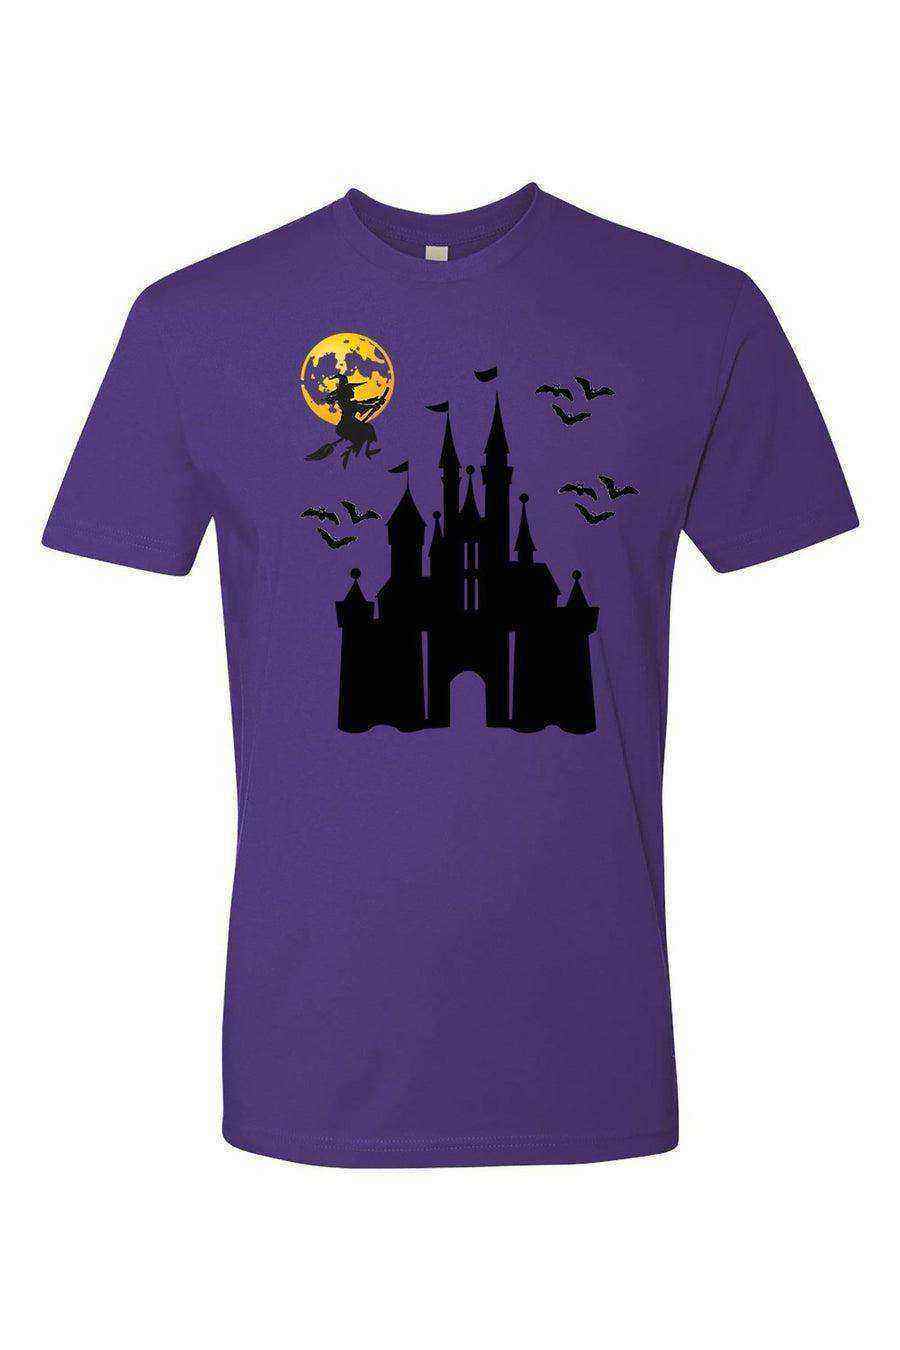 Haunted Castle Shirt | Halloween - Dylan's Tees